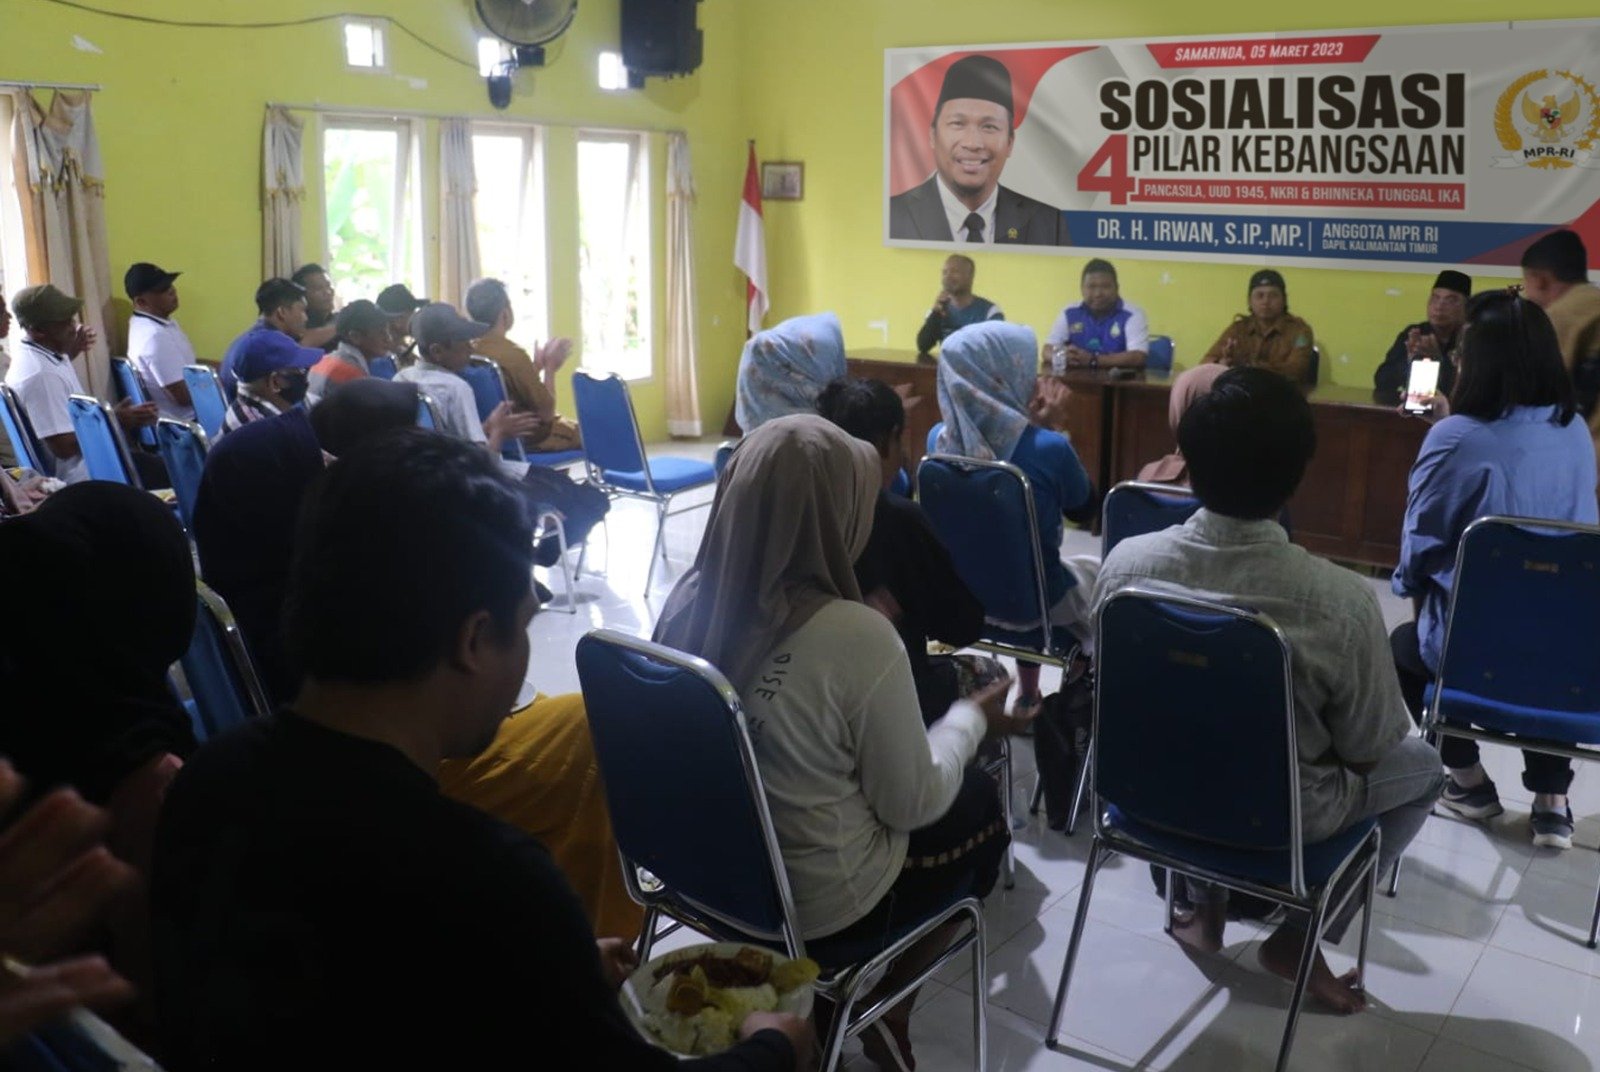 Anggota MPR RI Irwan menggelar acara Sosialisasi Empat Pilar Kebangsaan di Samarinda pada Minggu, 5 Maret 2023. (SinPo.id/Dok. Pribadi)